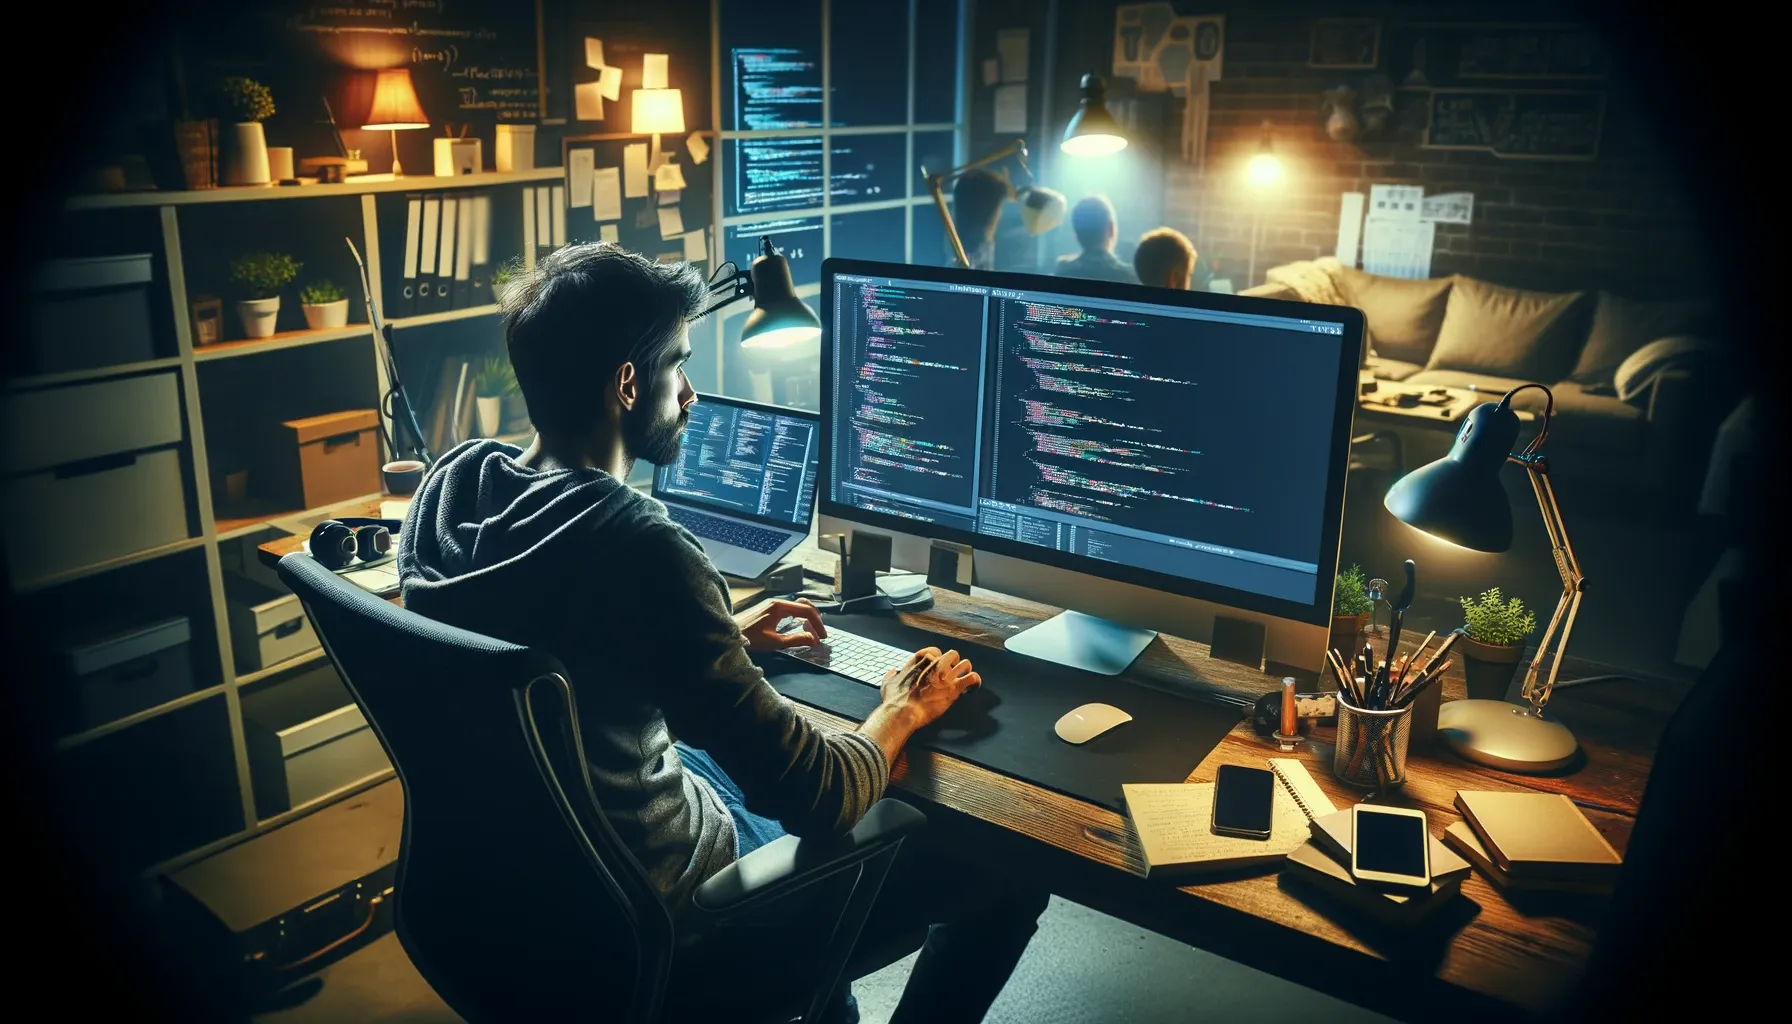 Developer coding on a laptop in a gadget-filled, dimly lit room